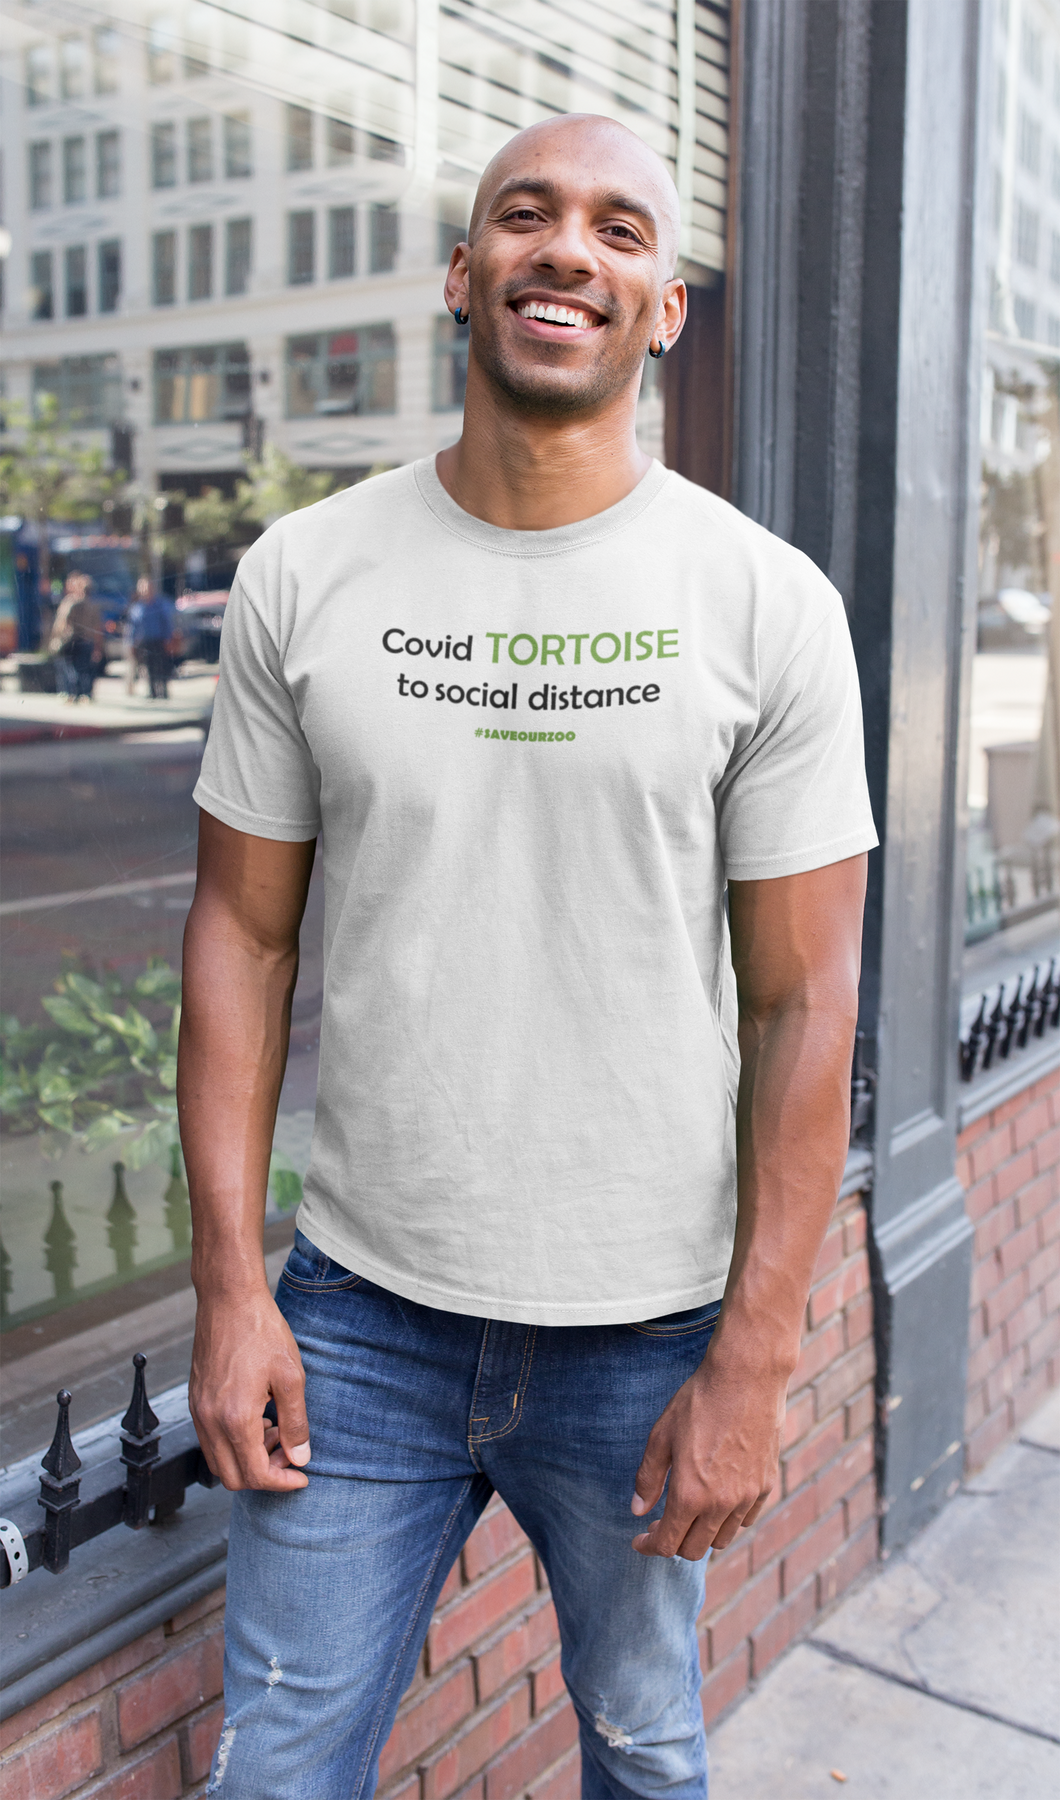 Tortoise - Unisex T-Shirt - #SaveOurZoo